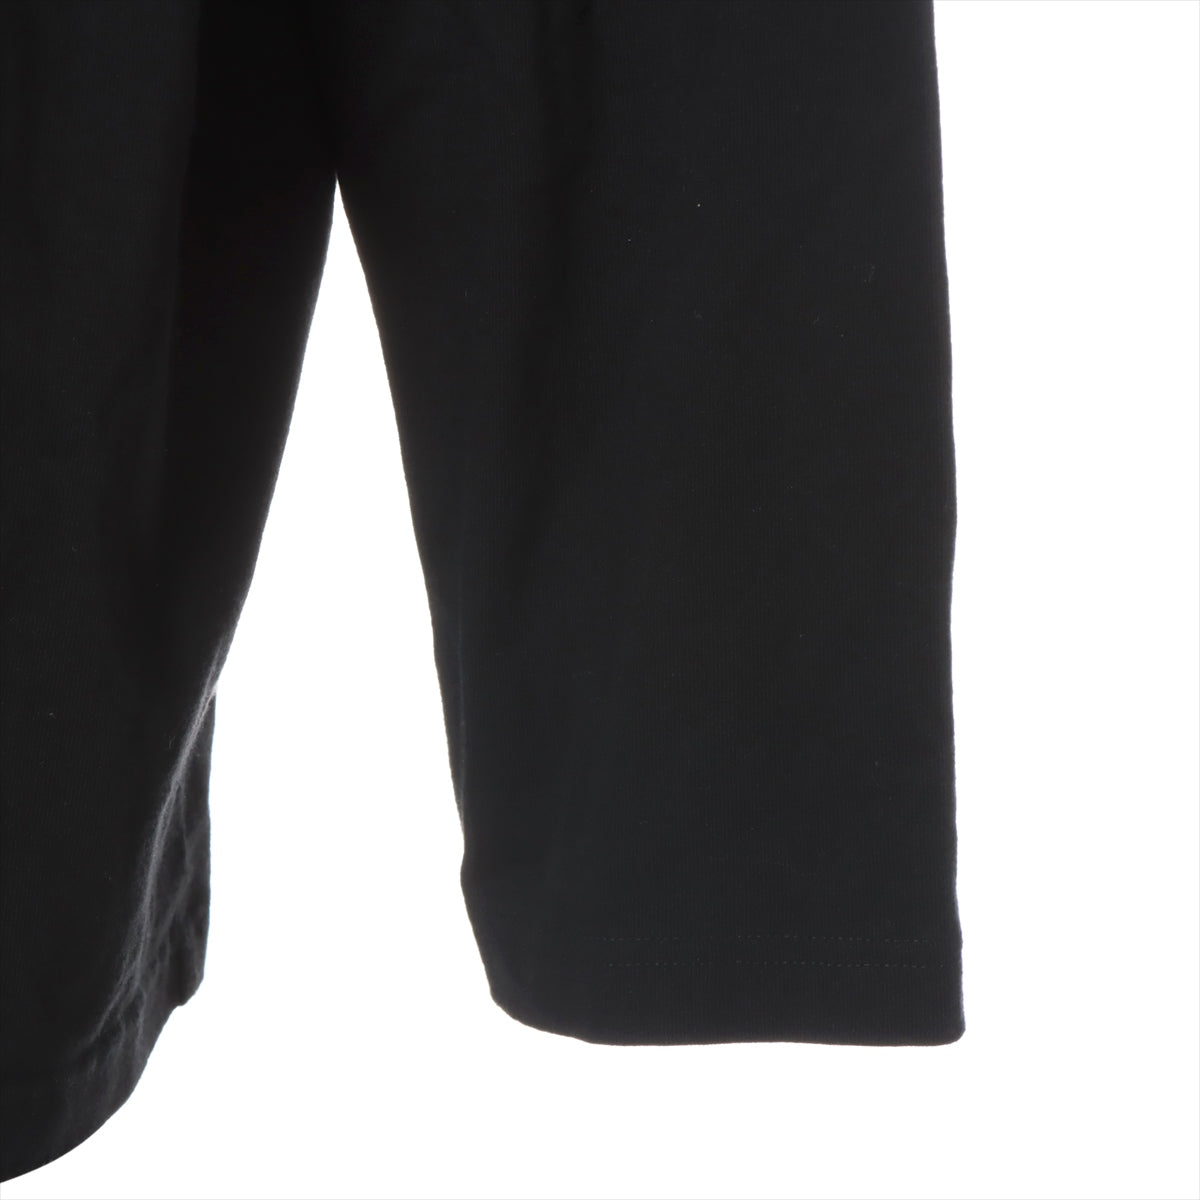 Balenciaga 21 years Cotton & Polyester Long T shirts XXS Unisex Black  662496 NASA emblem back logo Oversized